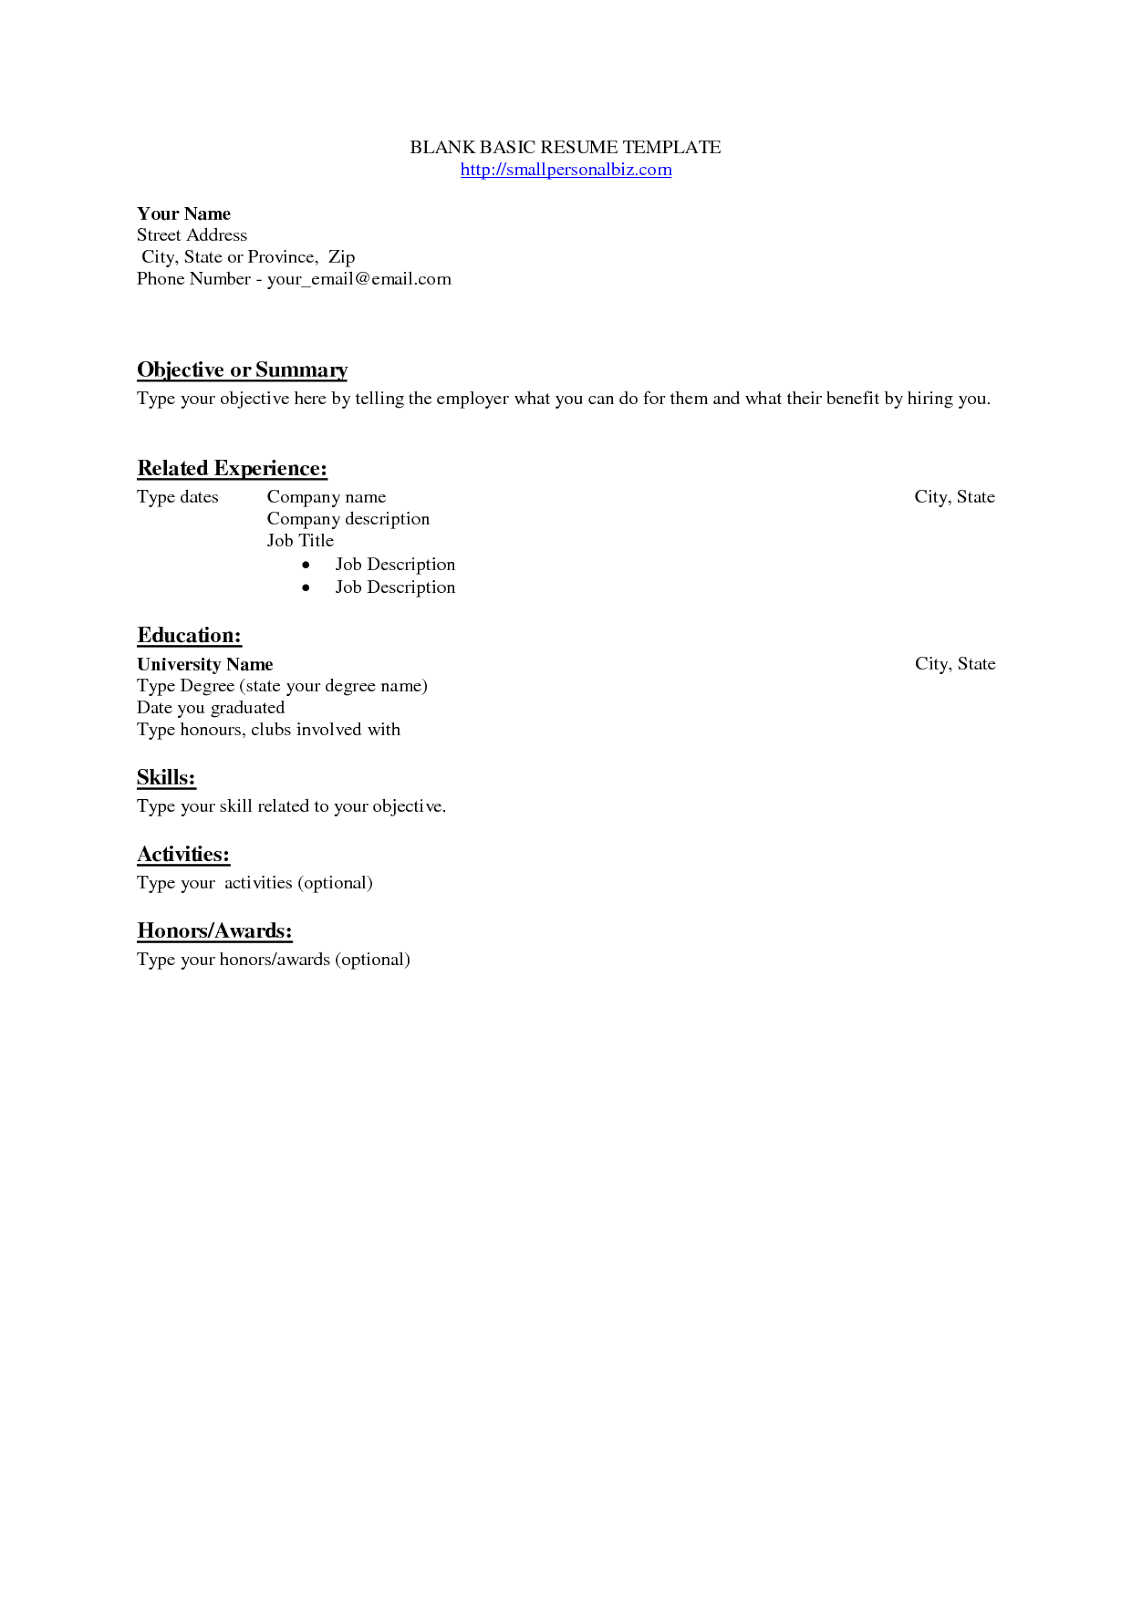 File download resume programs